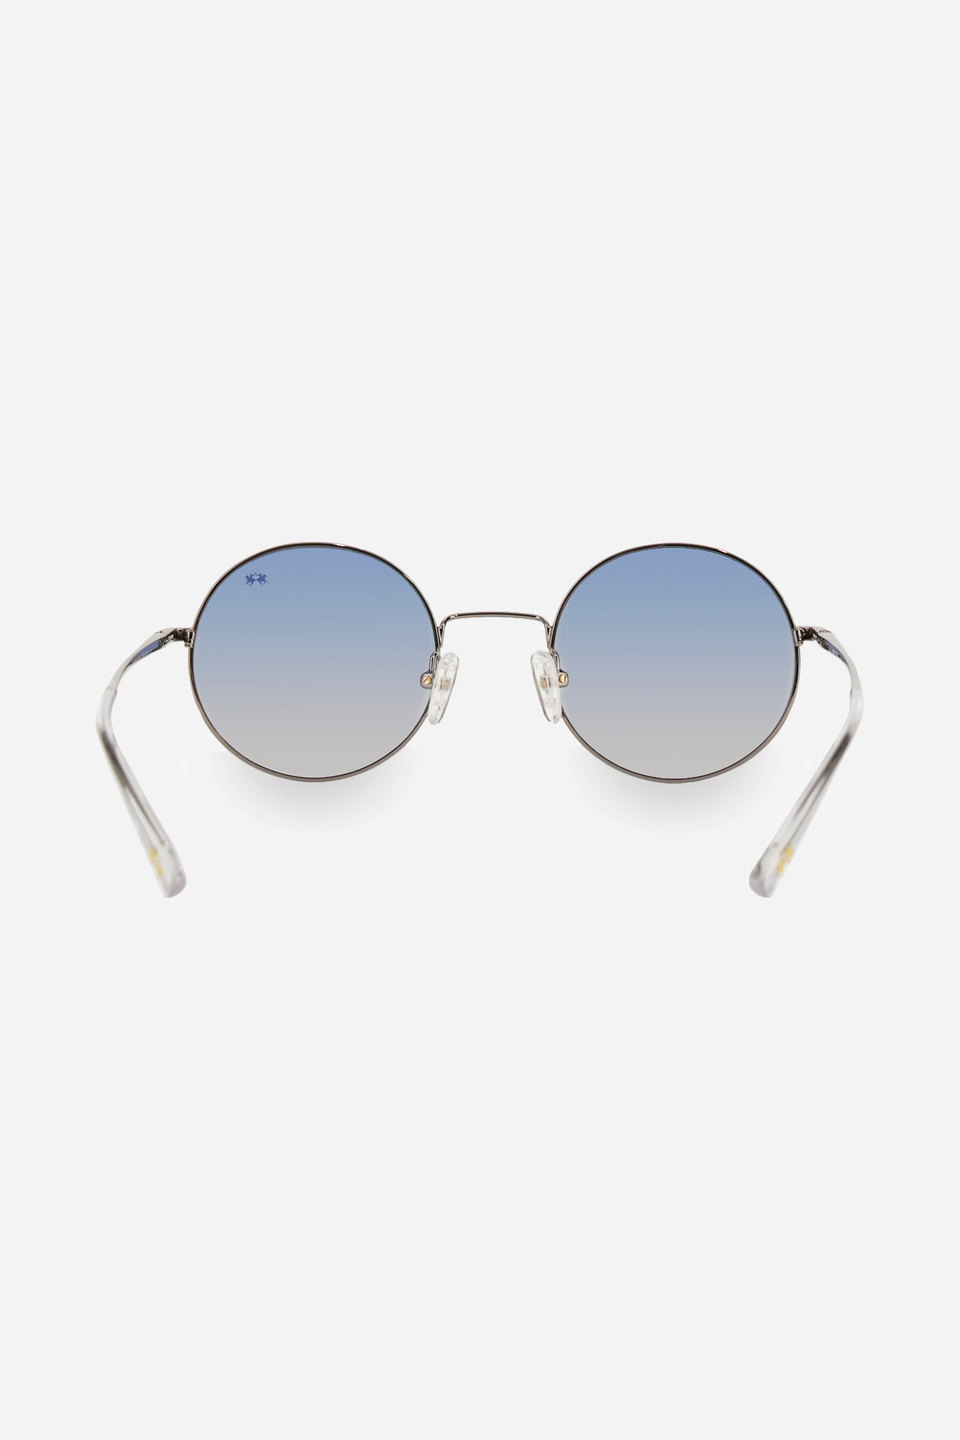 Sonnenbrille mit rundem Gestell | La Martina - Official Online Shop